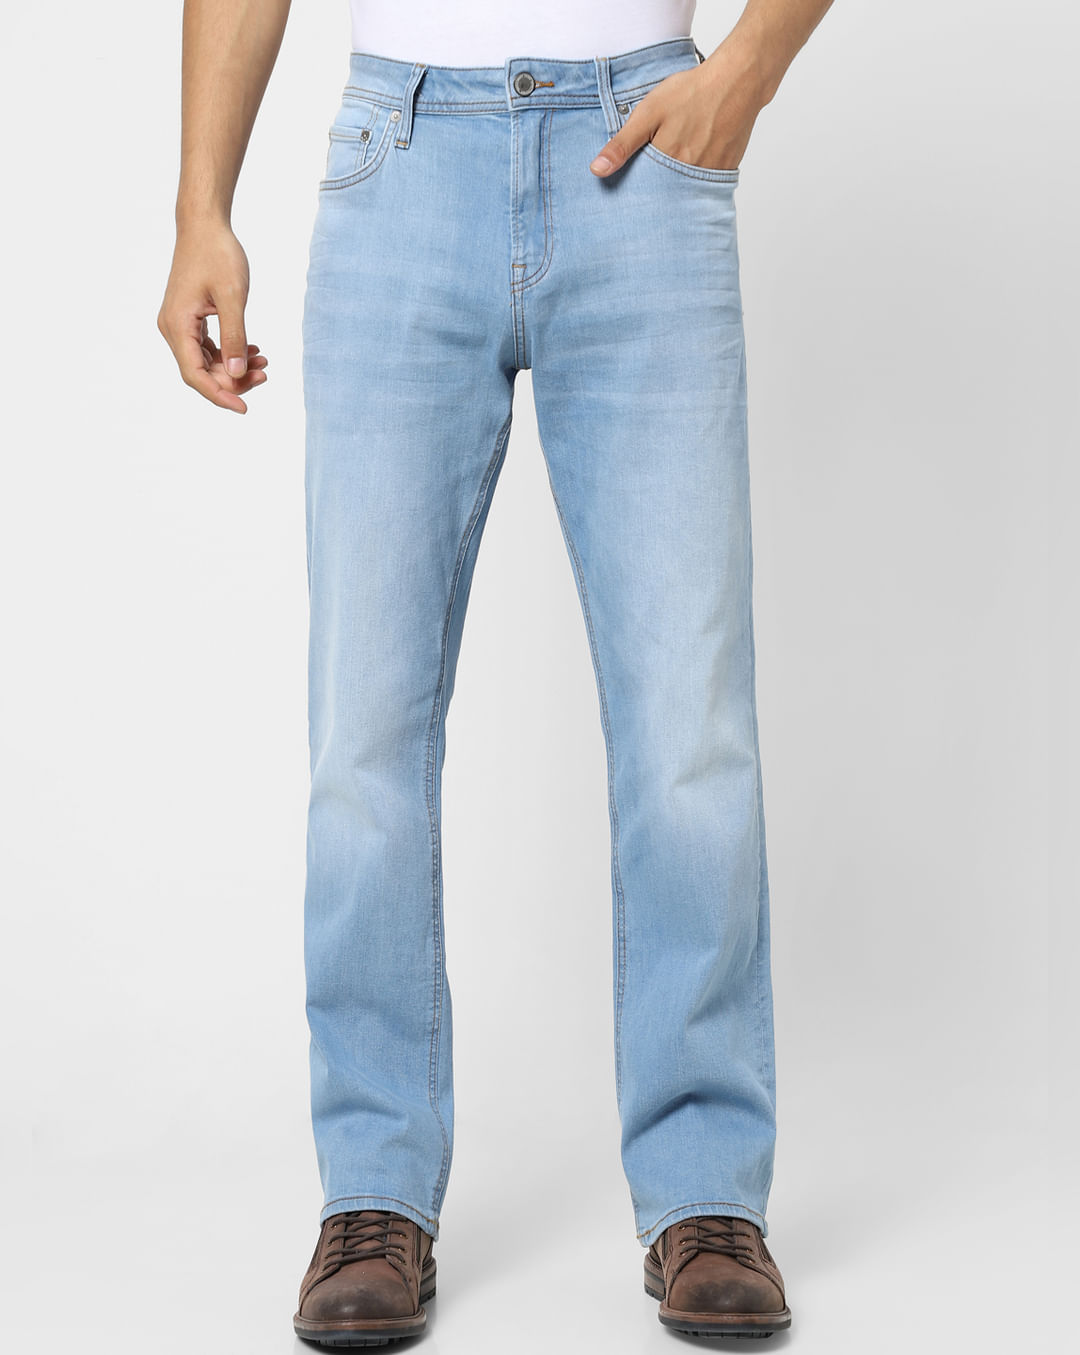 Buy Light Blue Low Rise Bootcut Jeans for Men